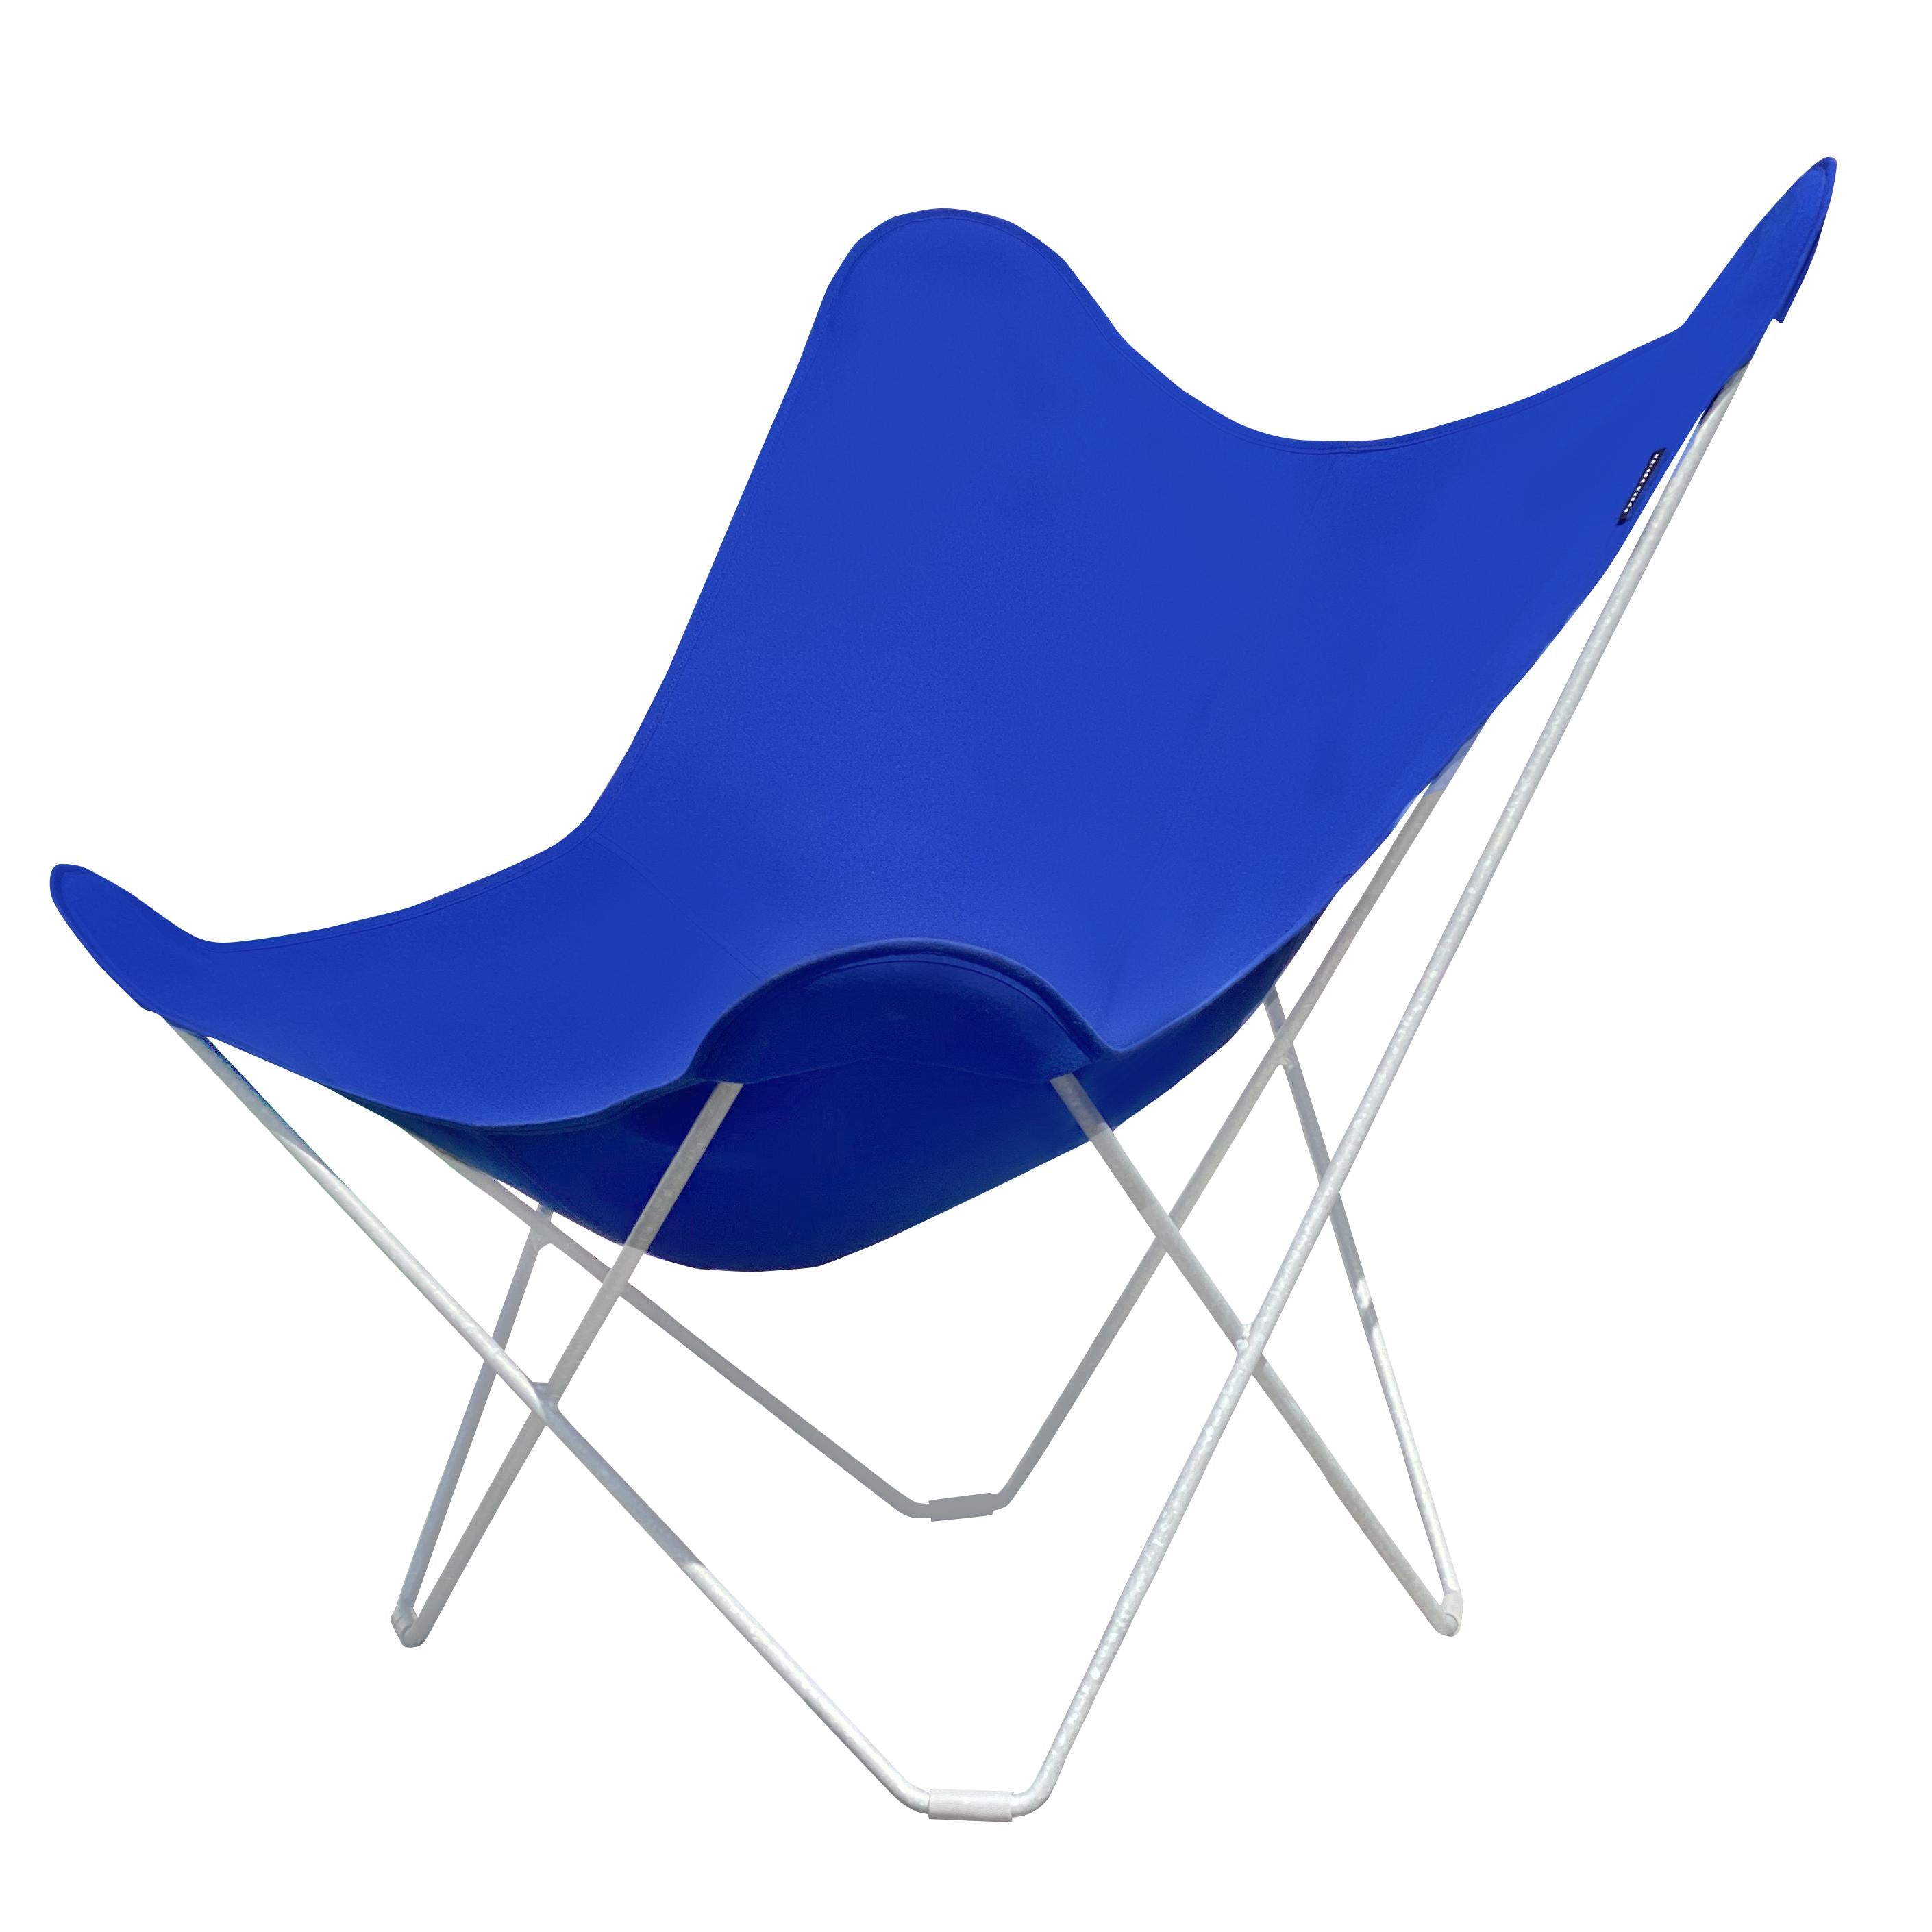 Cuero Sunshine Mariposa Butterfly krzesło, Atlantic Blue/Black Galvised